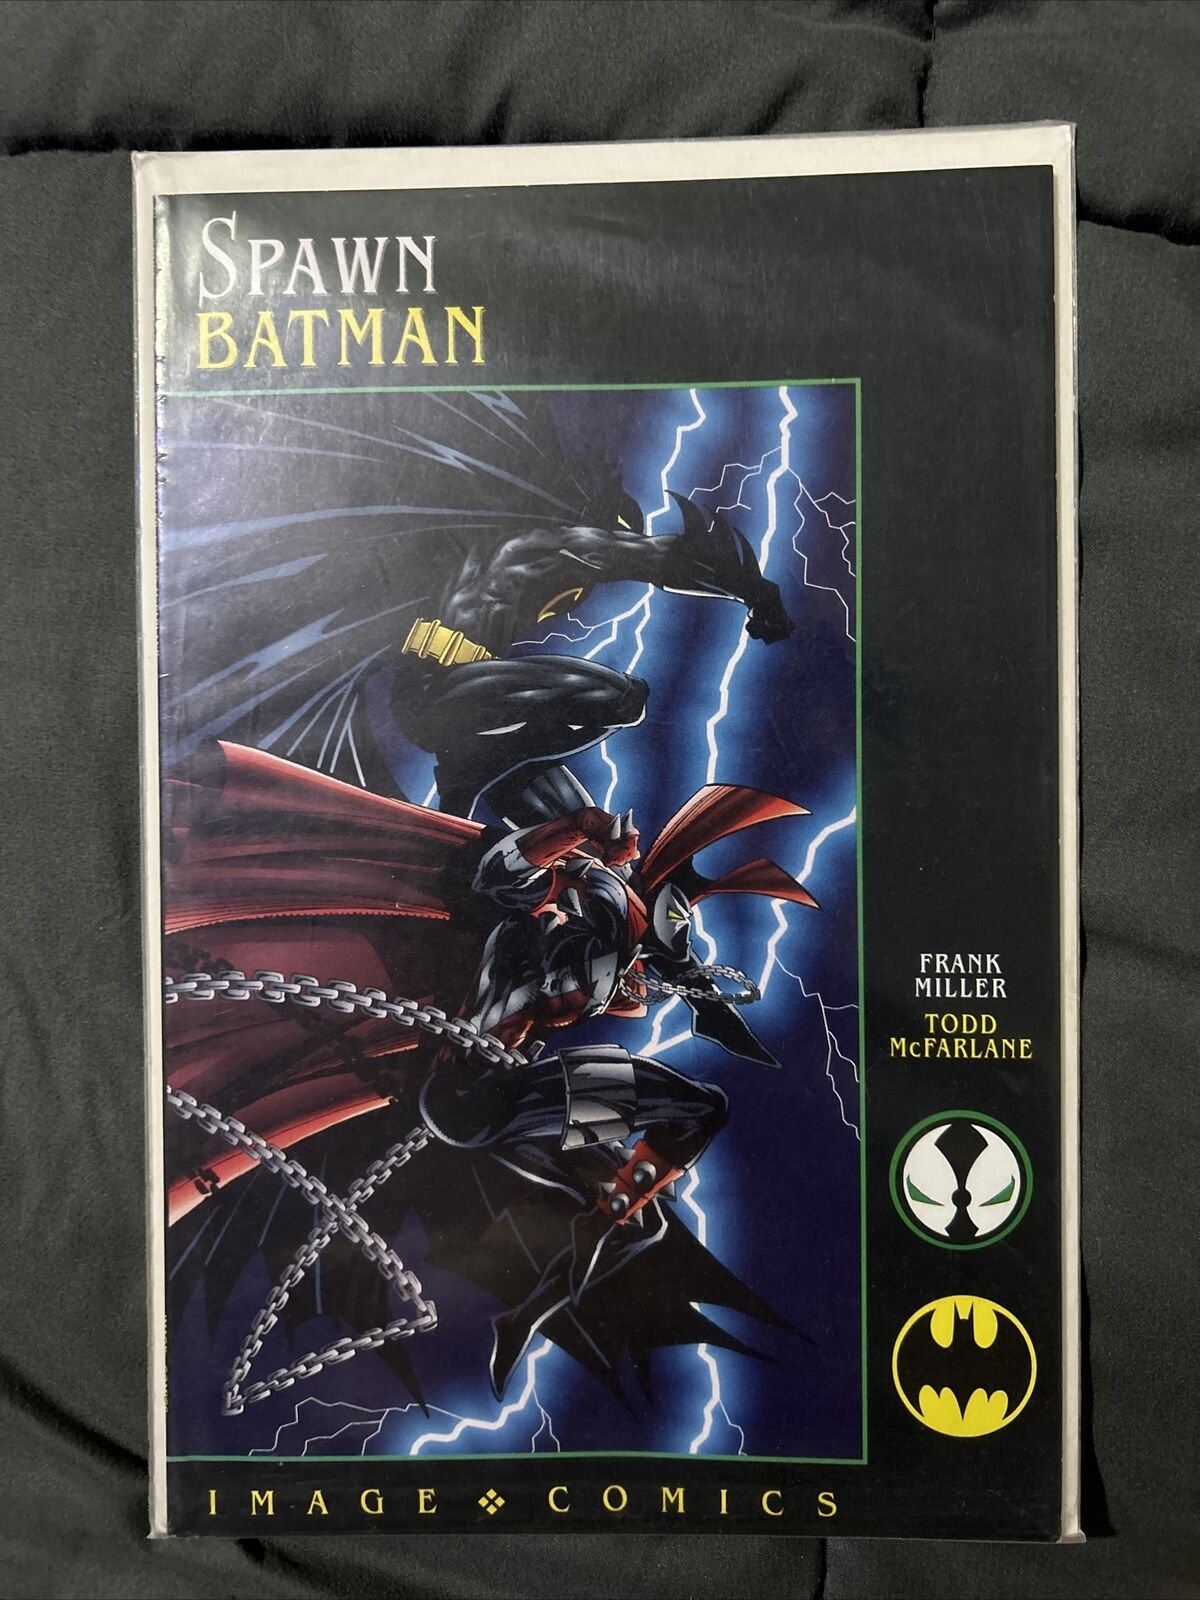 IC Spawn Batman 1994 Frank Miller & Todd McFarlane.